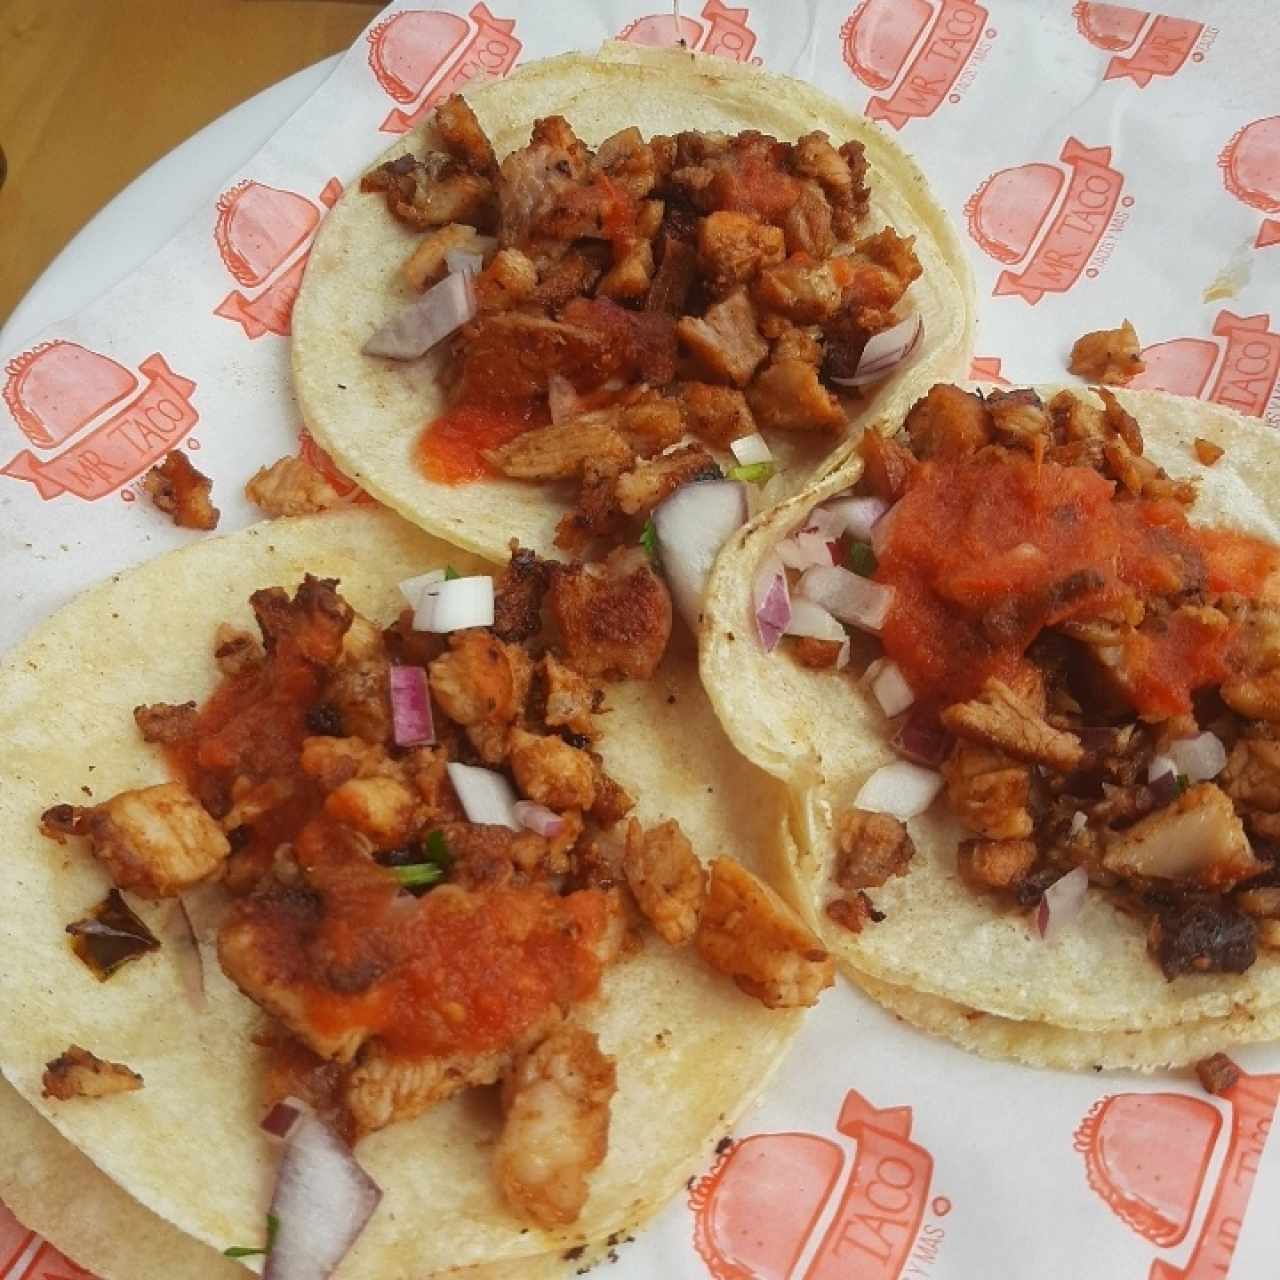 Tacos - Gringas - Al Pastor